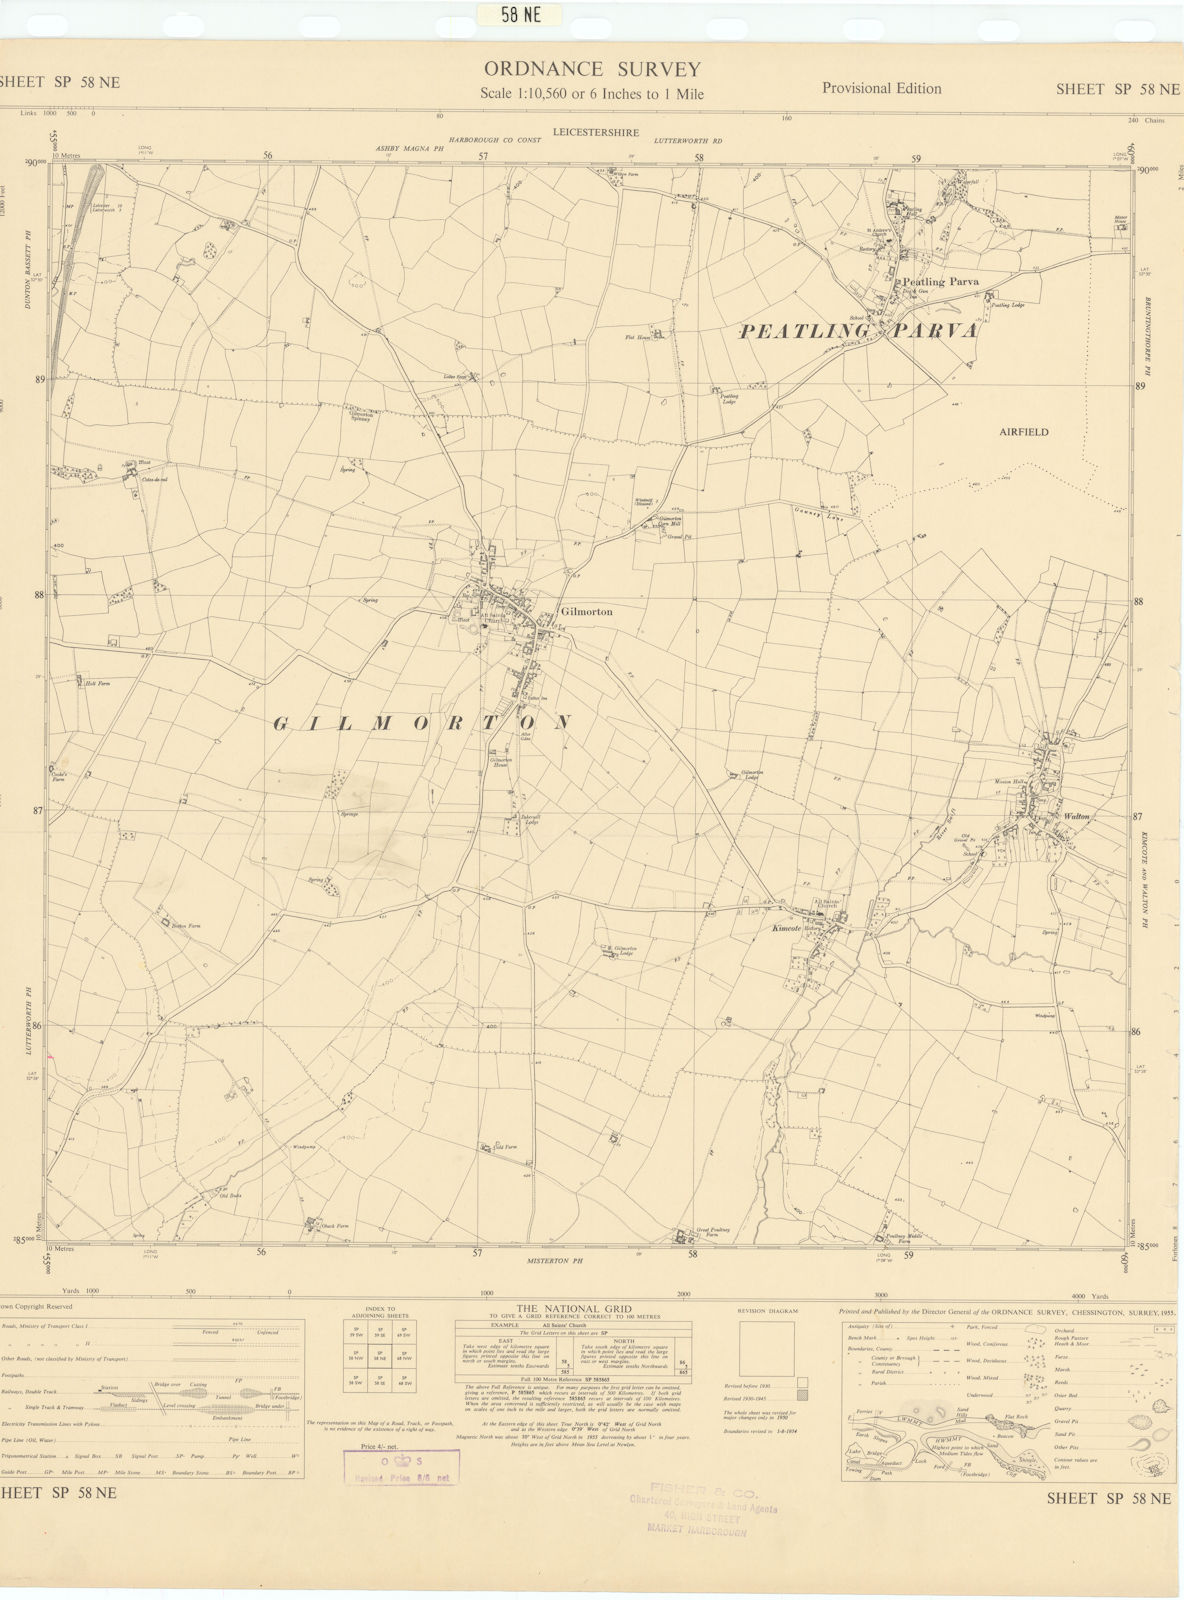 Associate Product Ordnance Survey SP58NE Leicestershire Gilmorton Walton Peatling Parva 1955 map